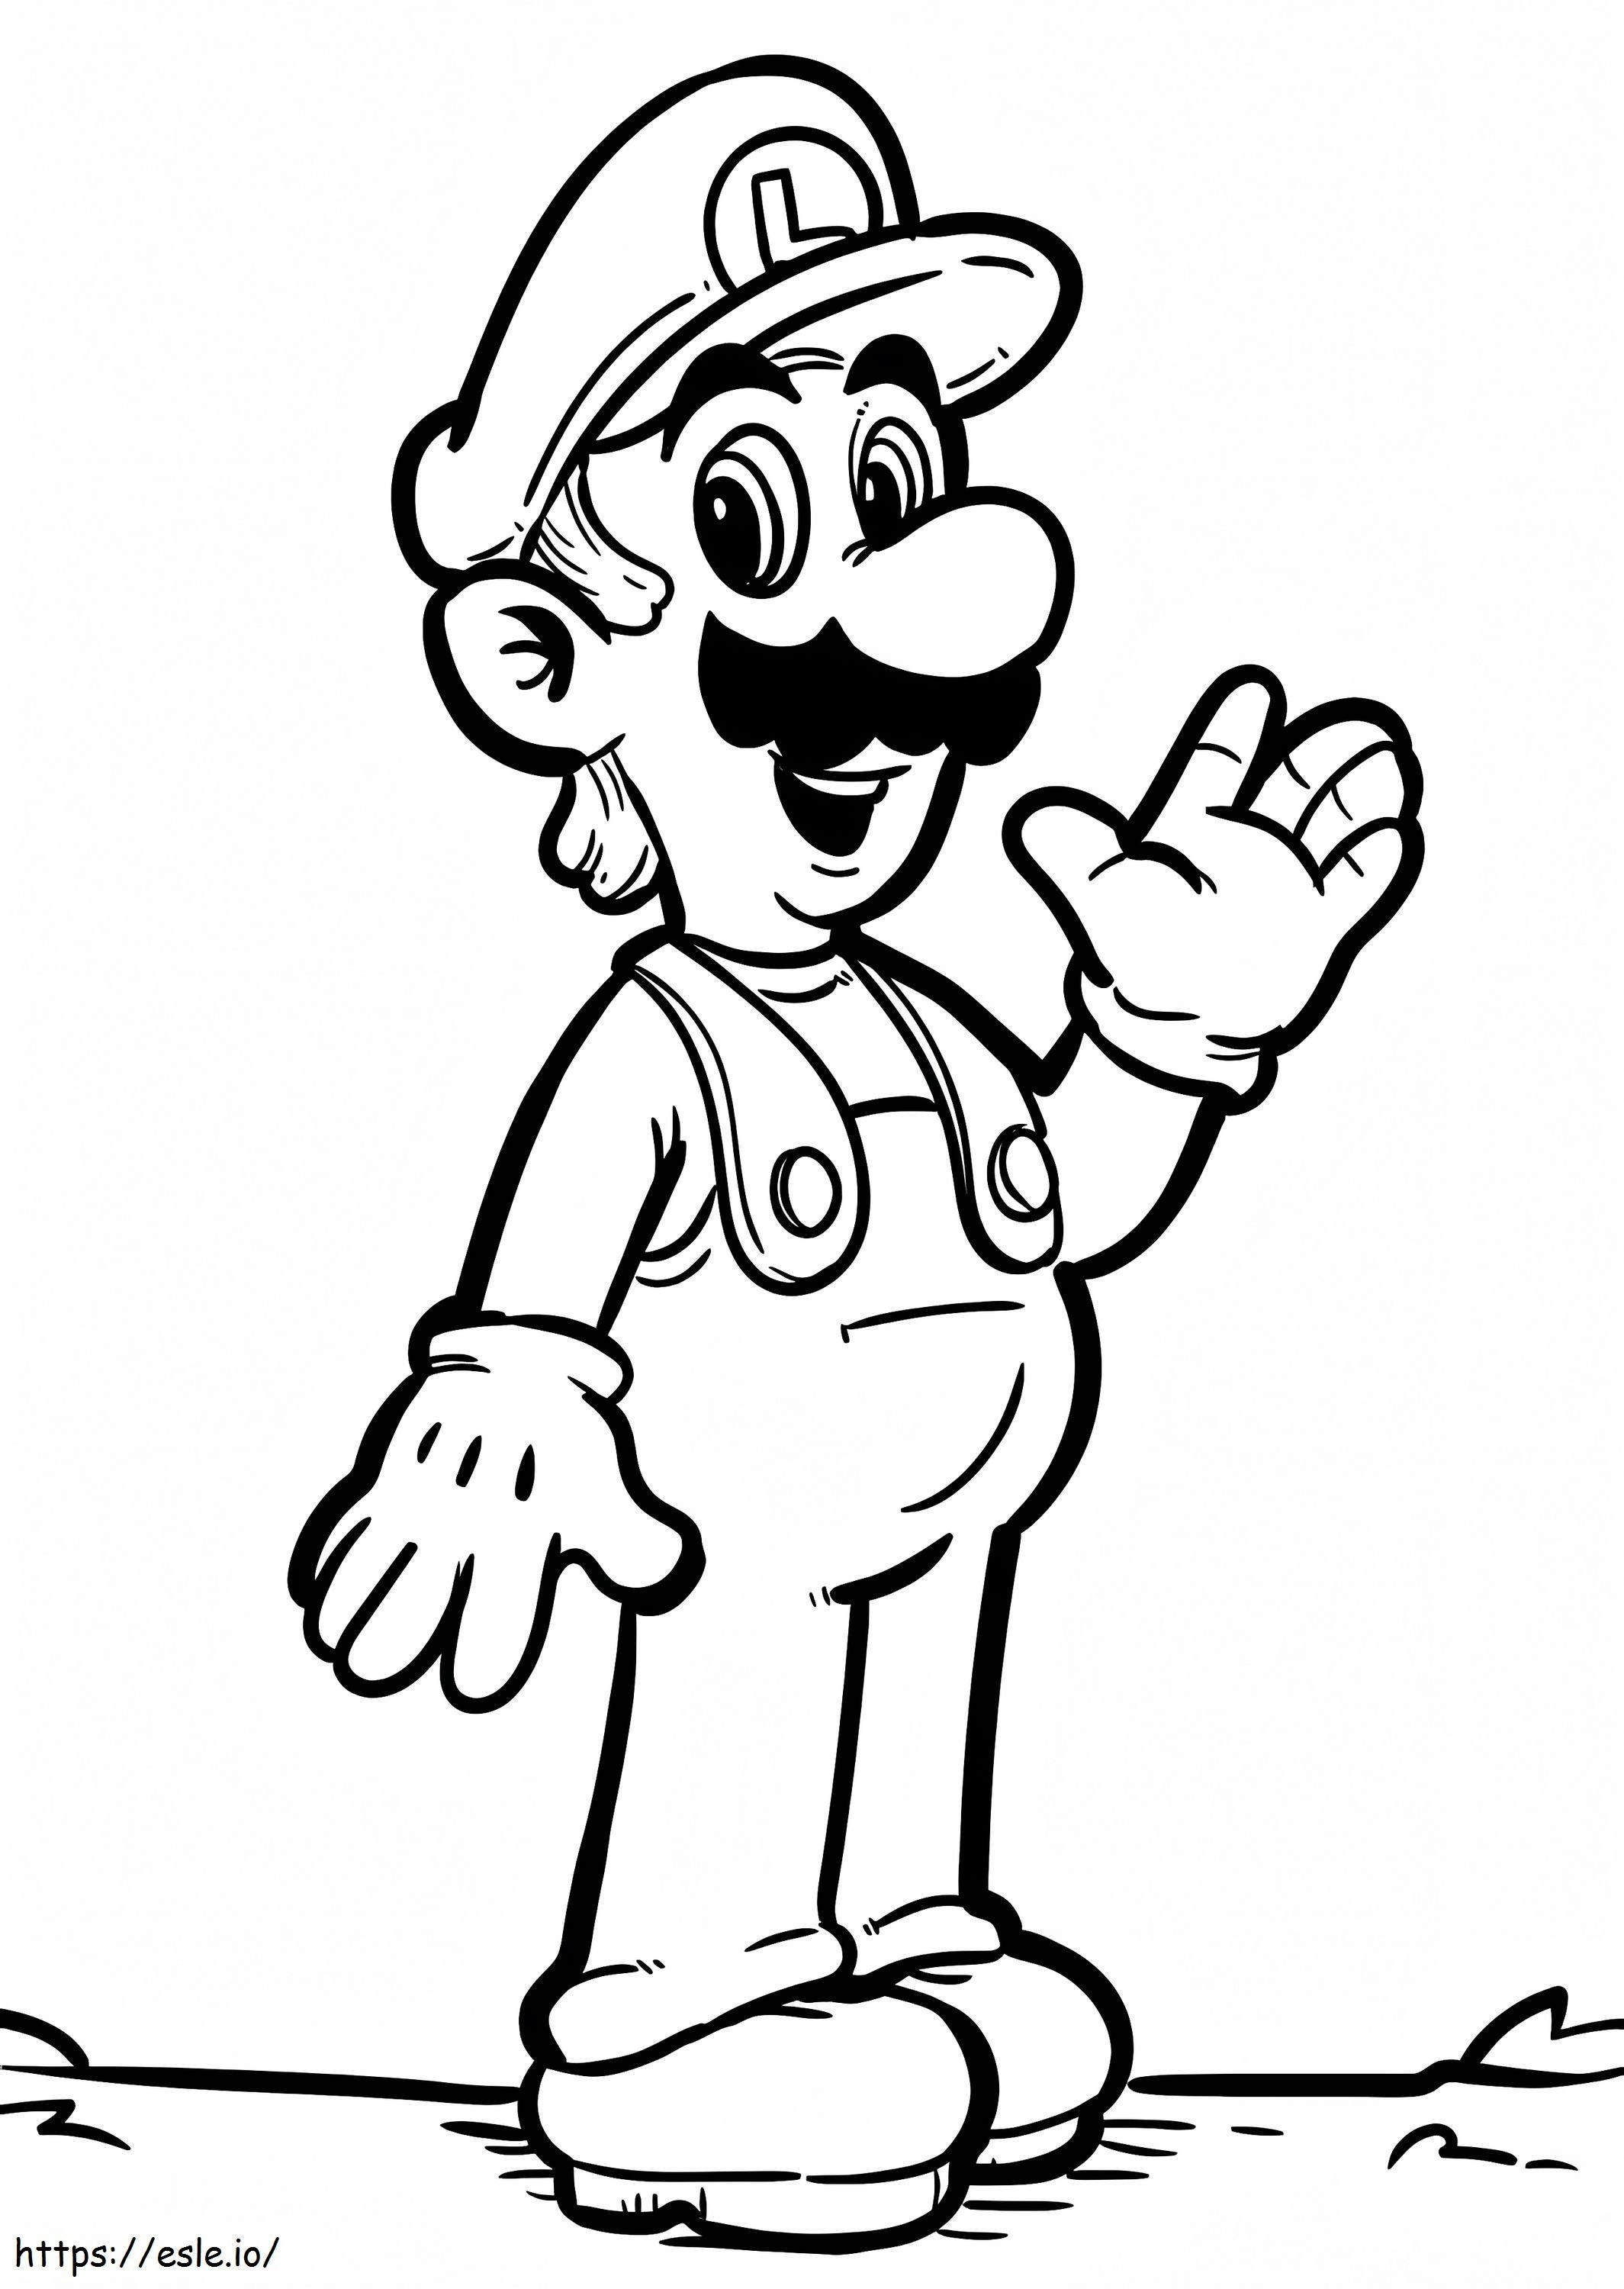 Coloriage Luigi De Super Mario 2 à imprimer dessin